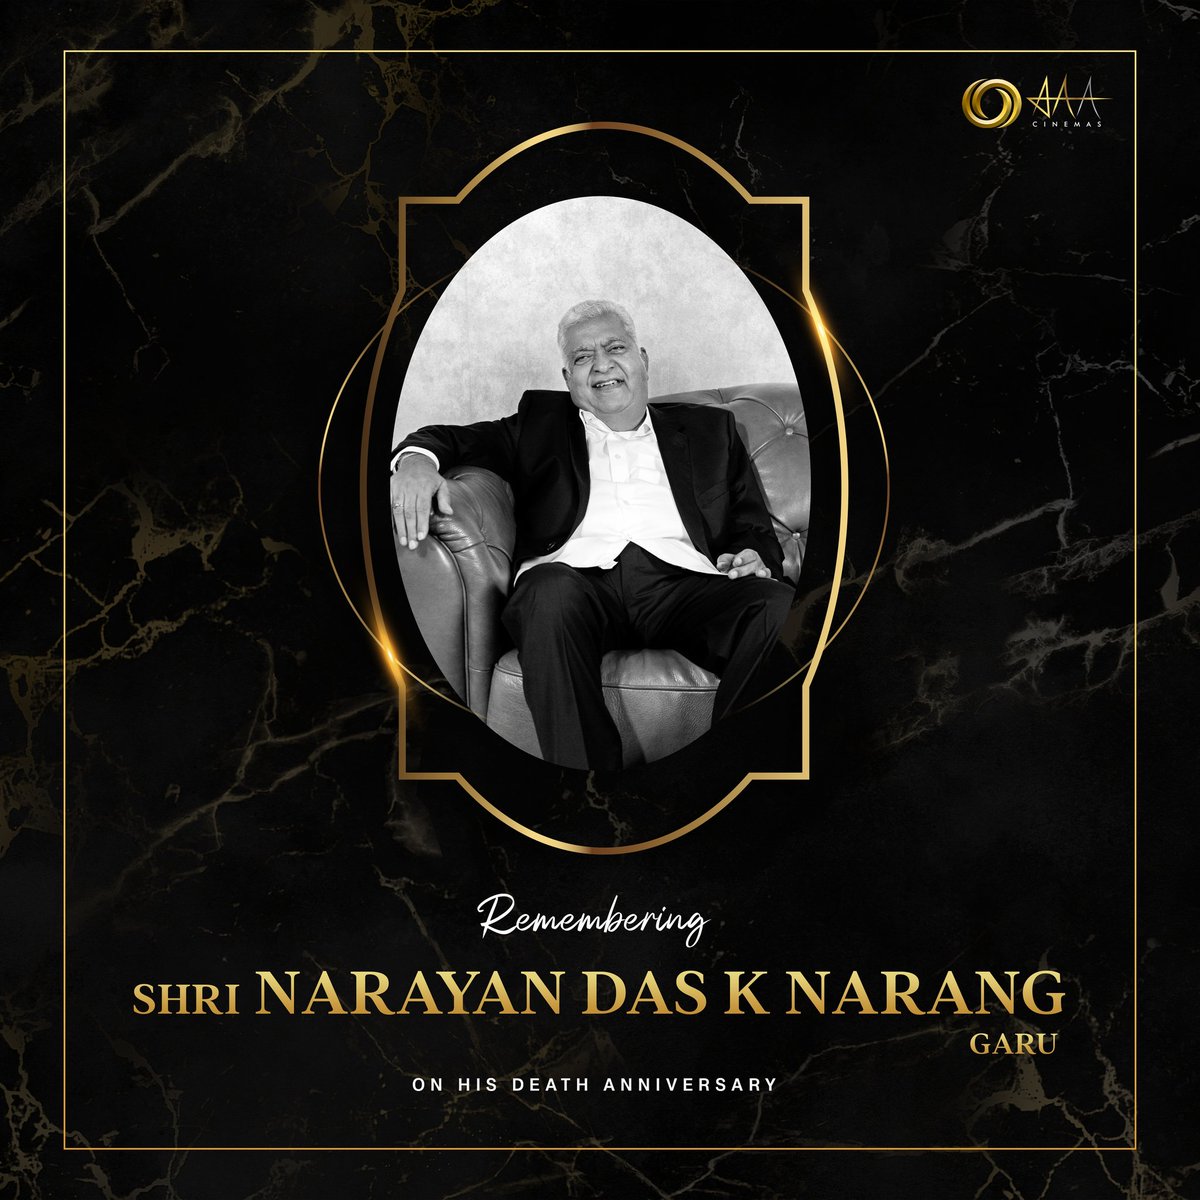 The visionary and legendary, Narayan Das K Narang garu's legacy will always be cherished.

#NarayanDasNarang